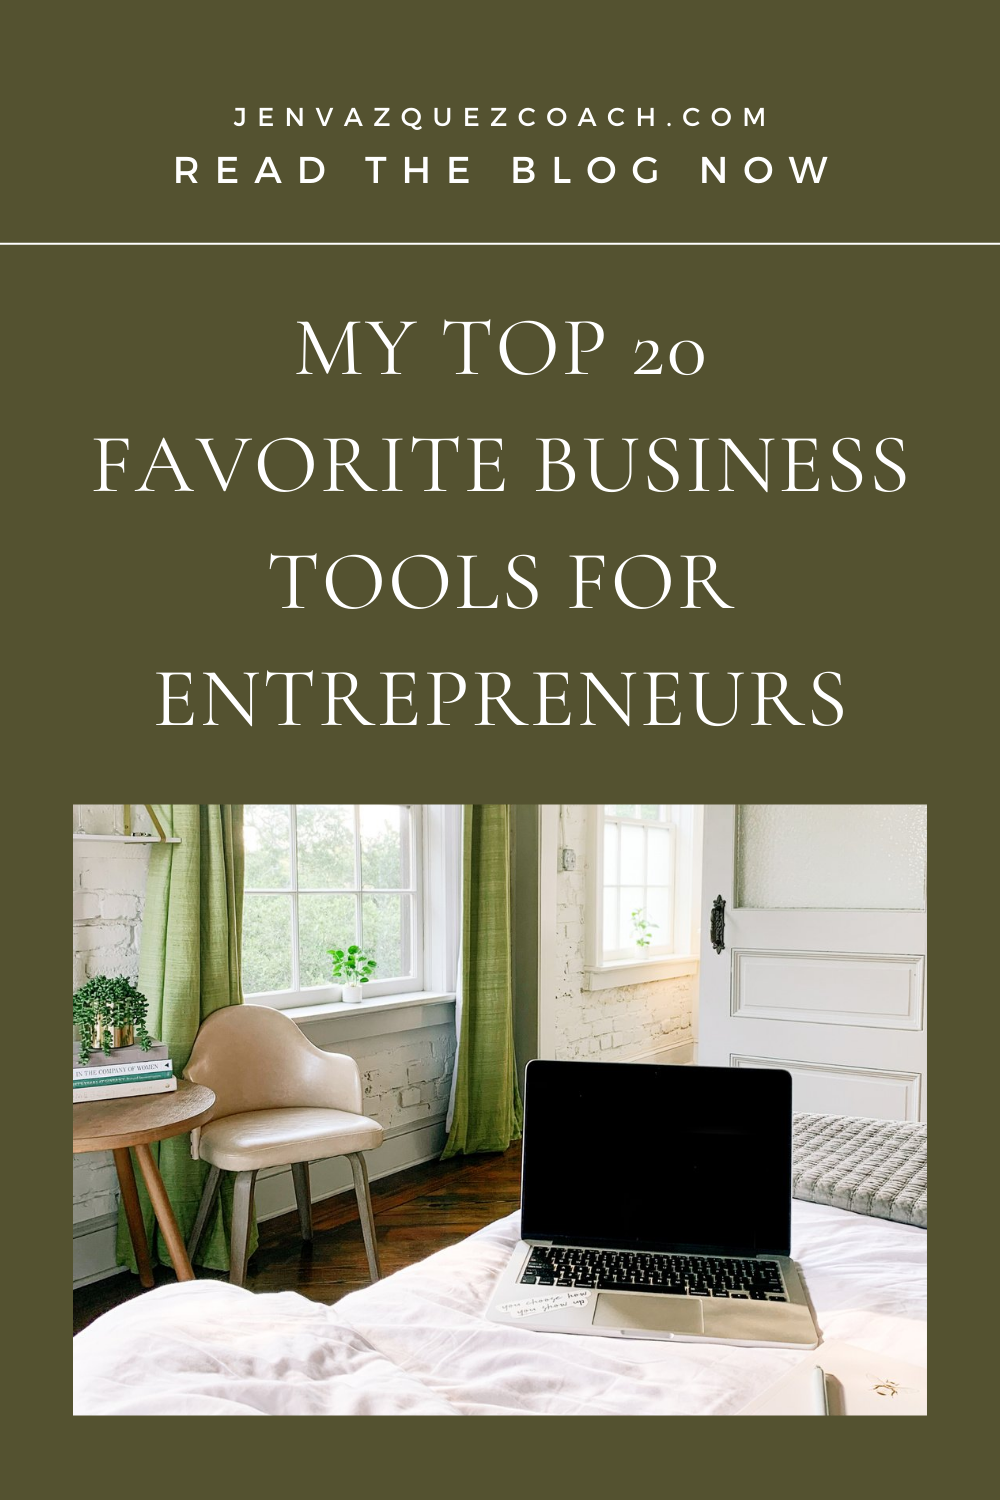 My Top 20 Favorite Business Tools for Entrepreneurs by jen vazquez